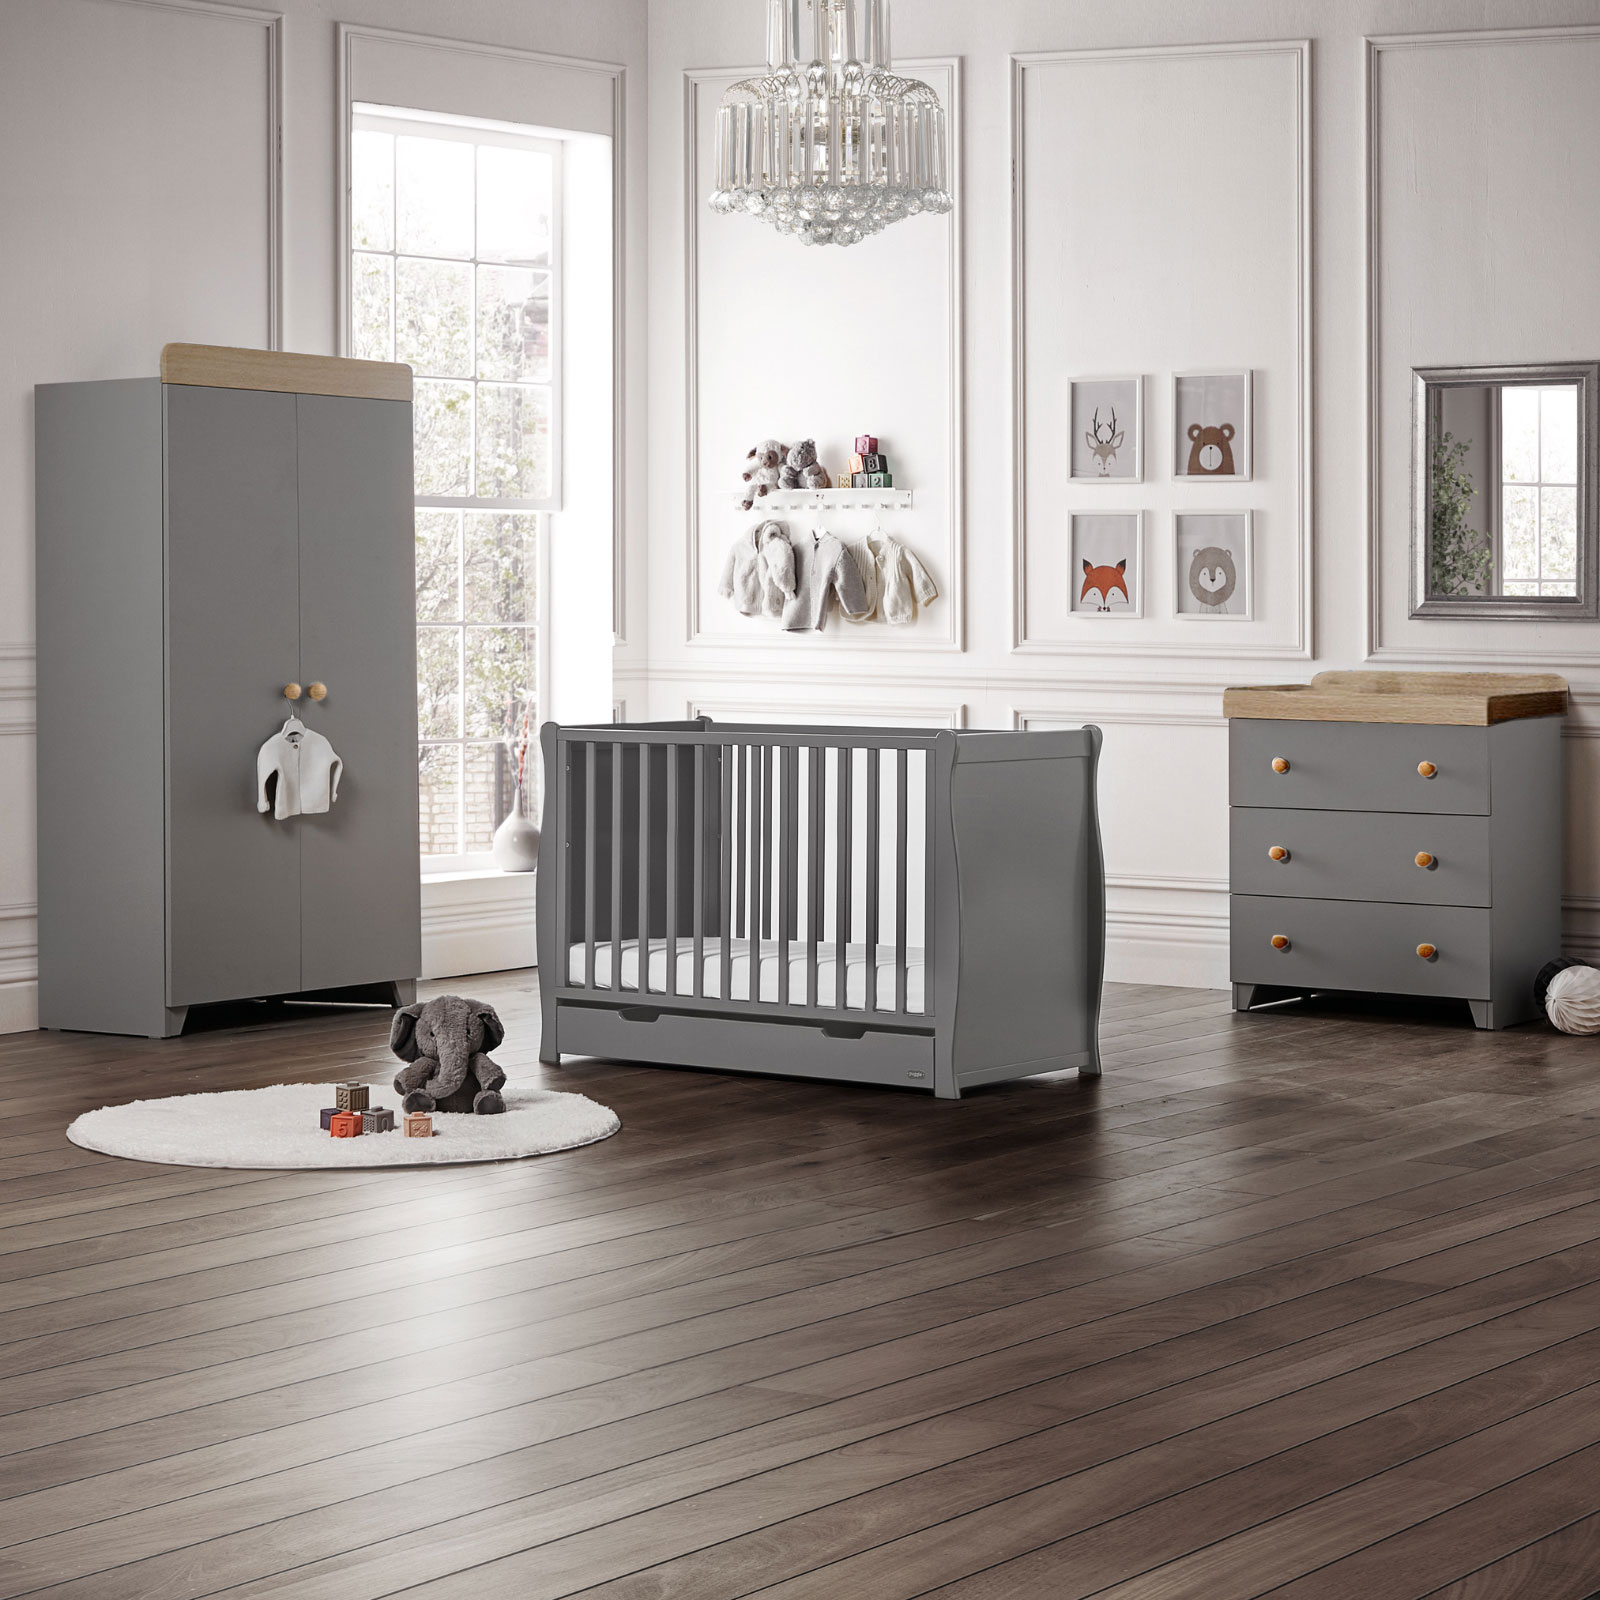 Puggle Chelford Sleigh Cot 6 Piece Nursery Furniture Set With Maxi Air Cool Mattress - Grey/Grey & Oak